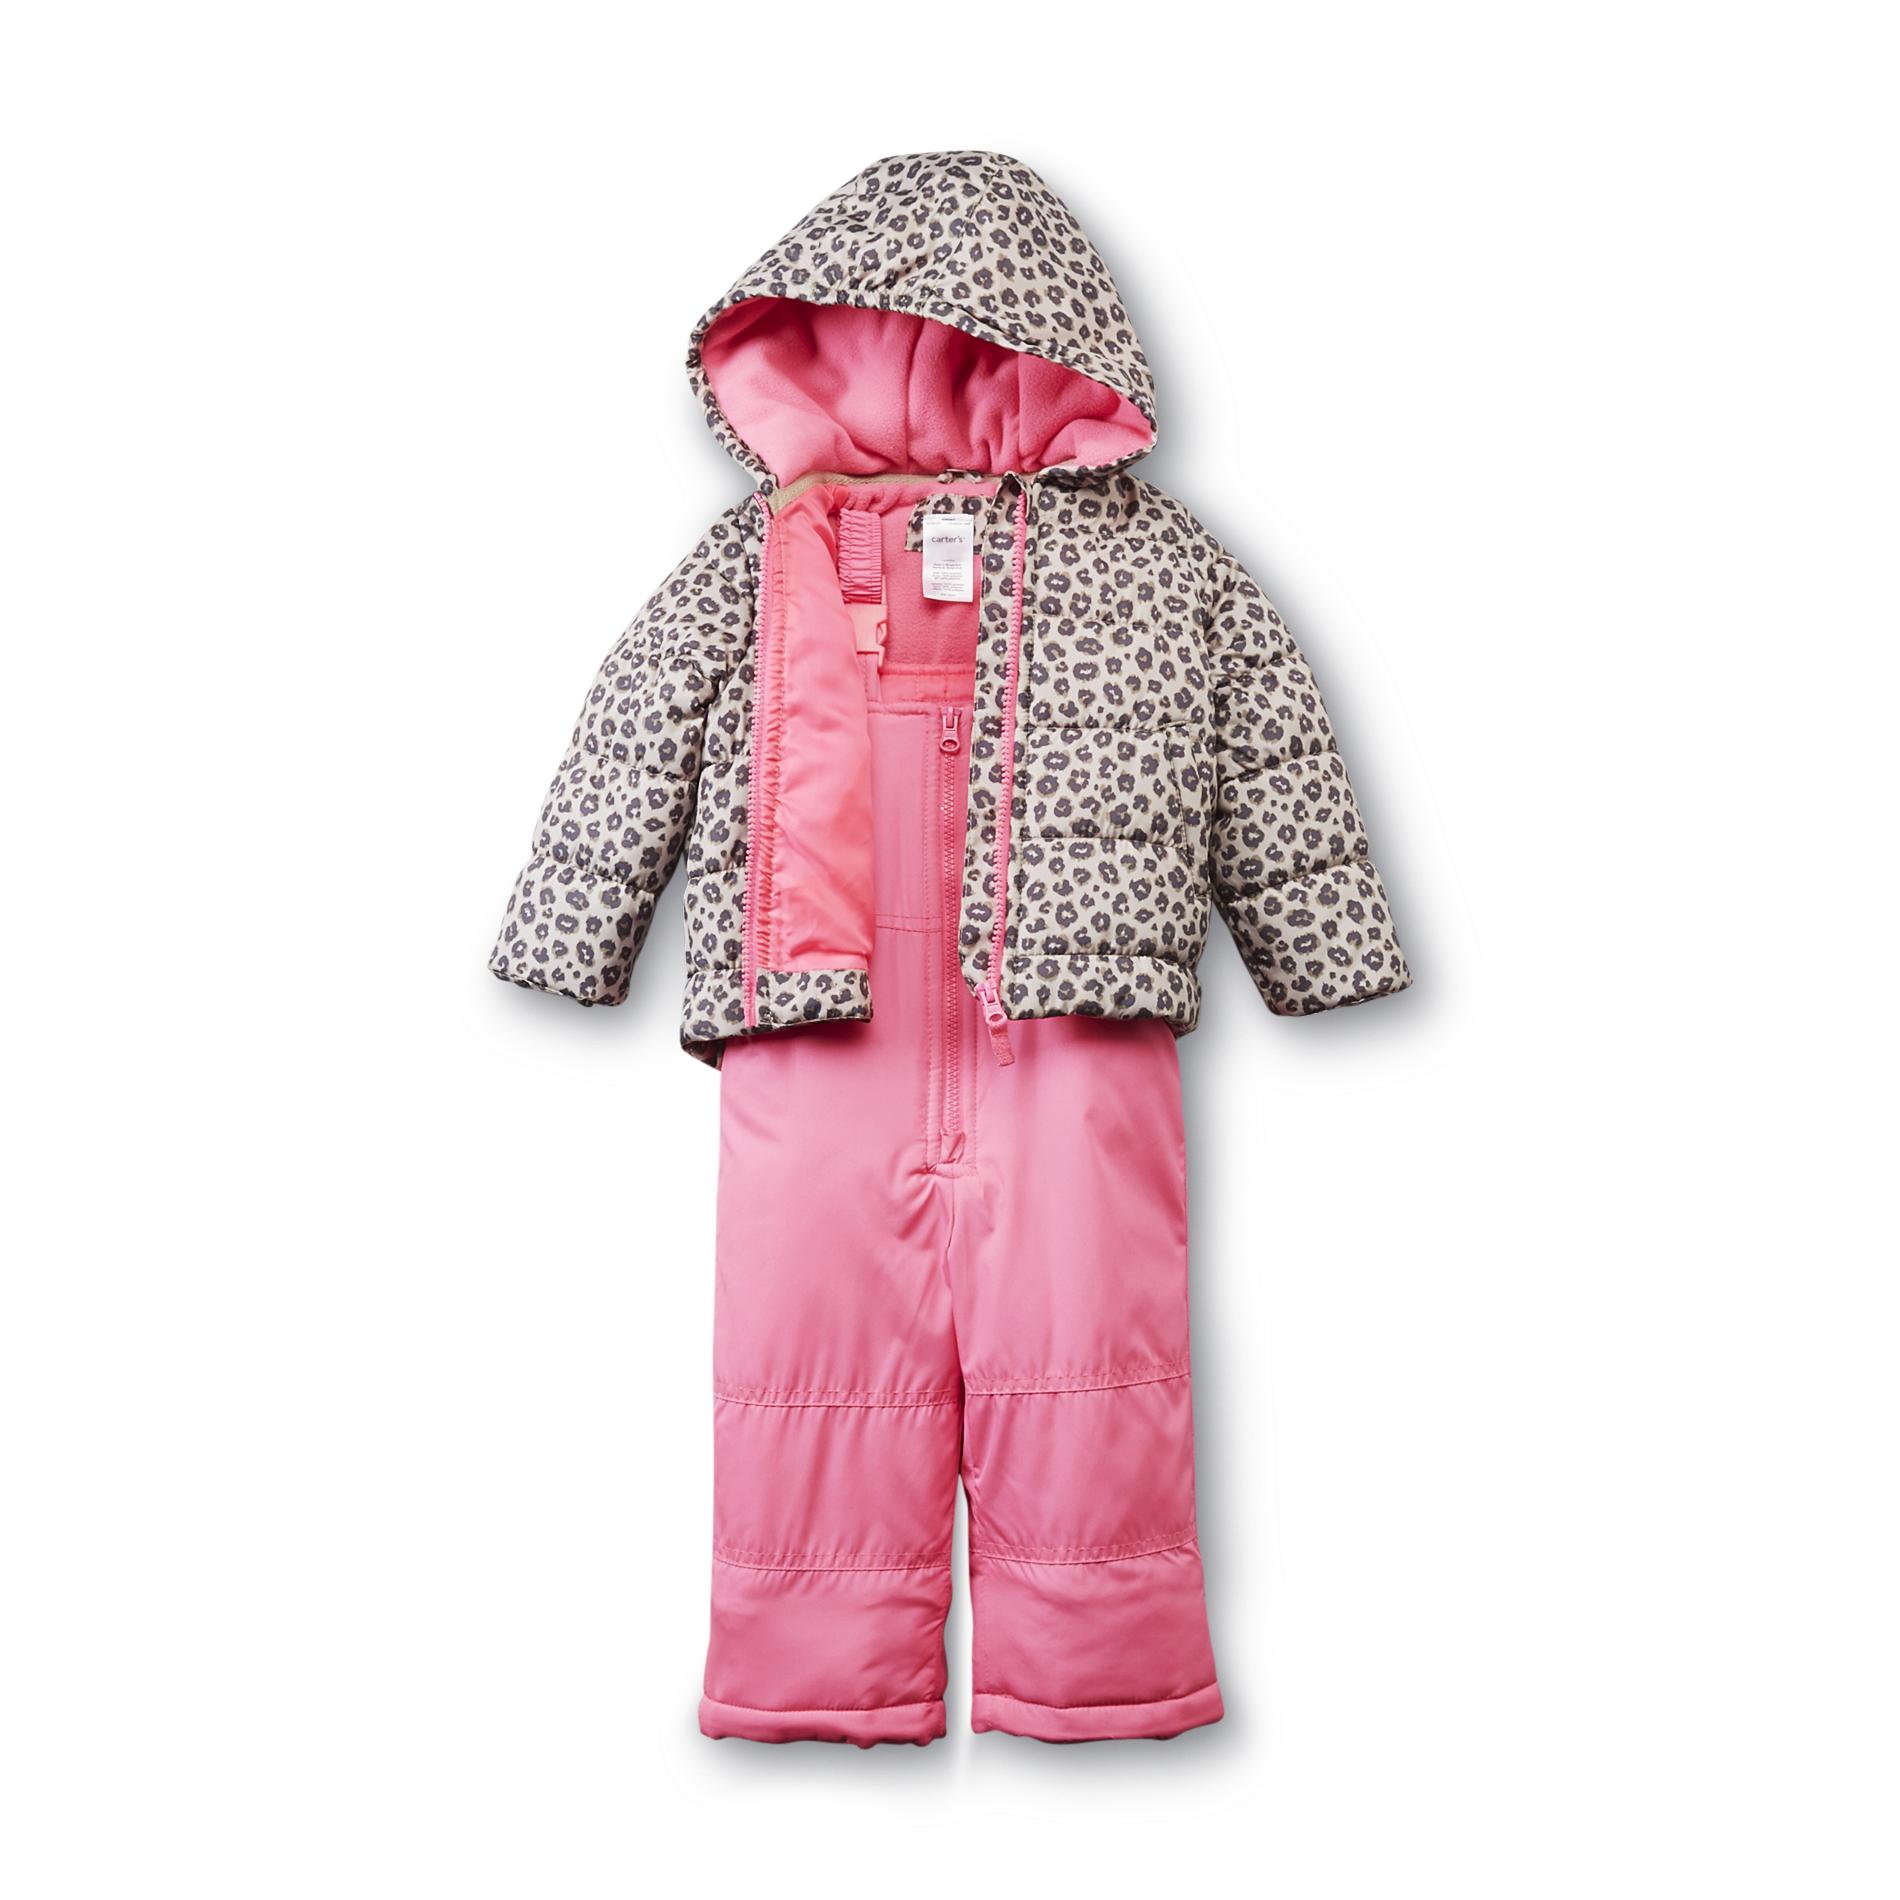 Carter's Infant Girl's Jacket & Snow Pants - Leopard Print